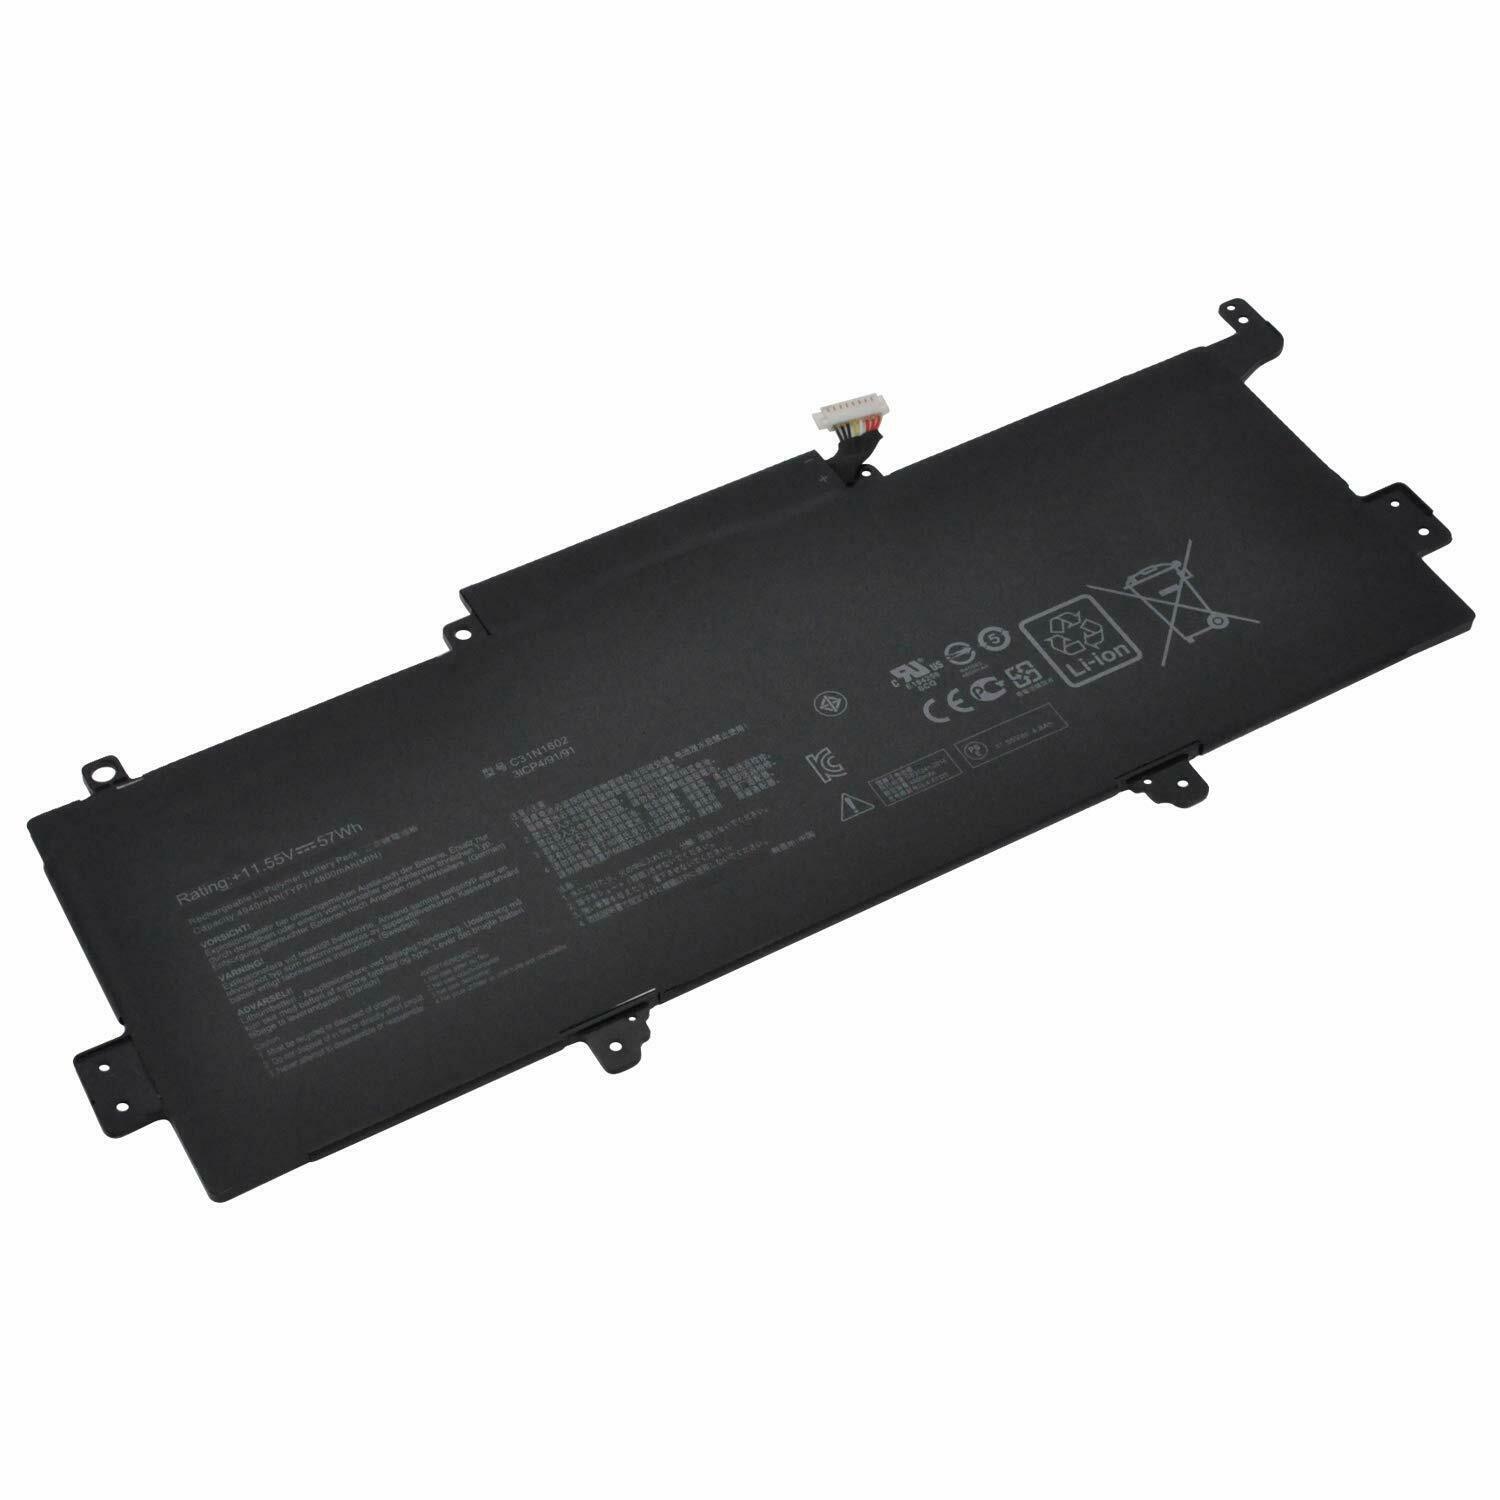 C31N1602 Asus Zenbook UX330 UX330UAK UX330UA UX330U UX330UA-1A compatible battery